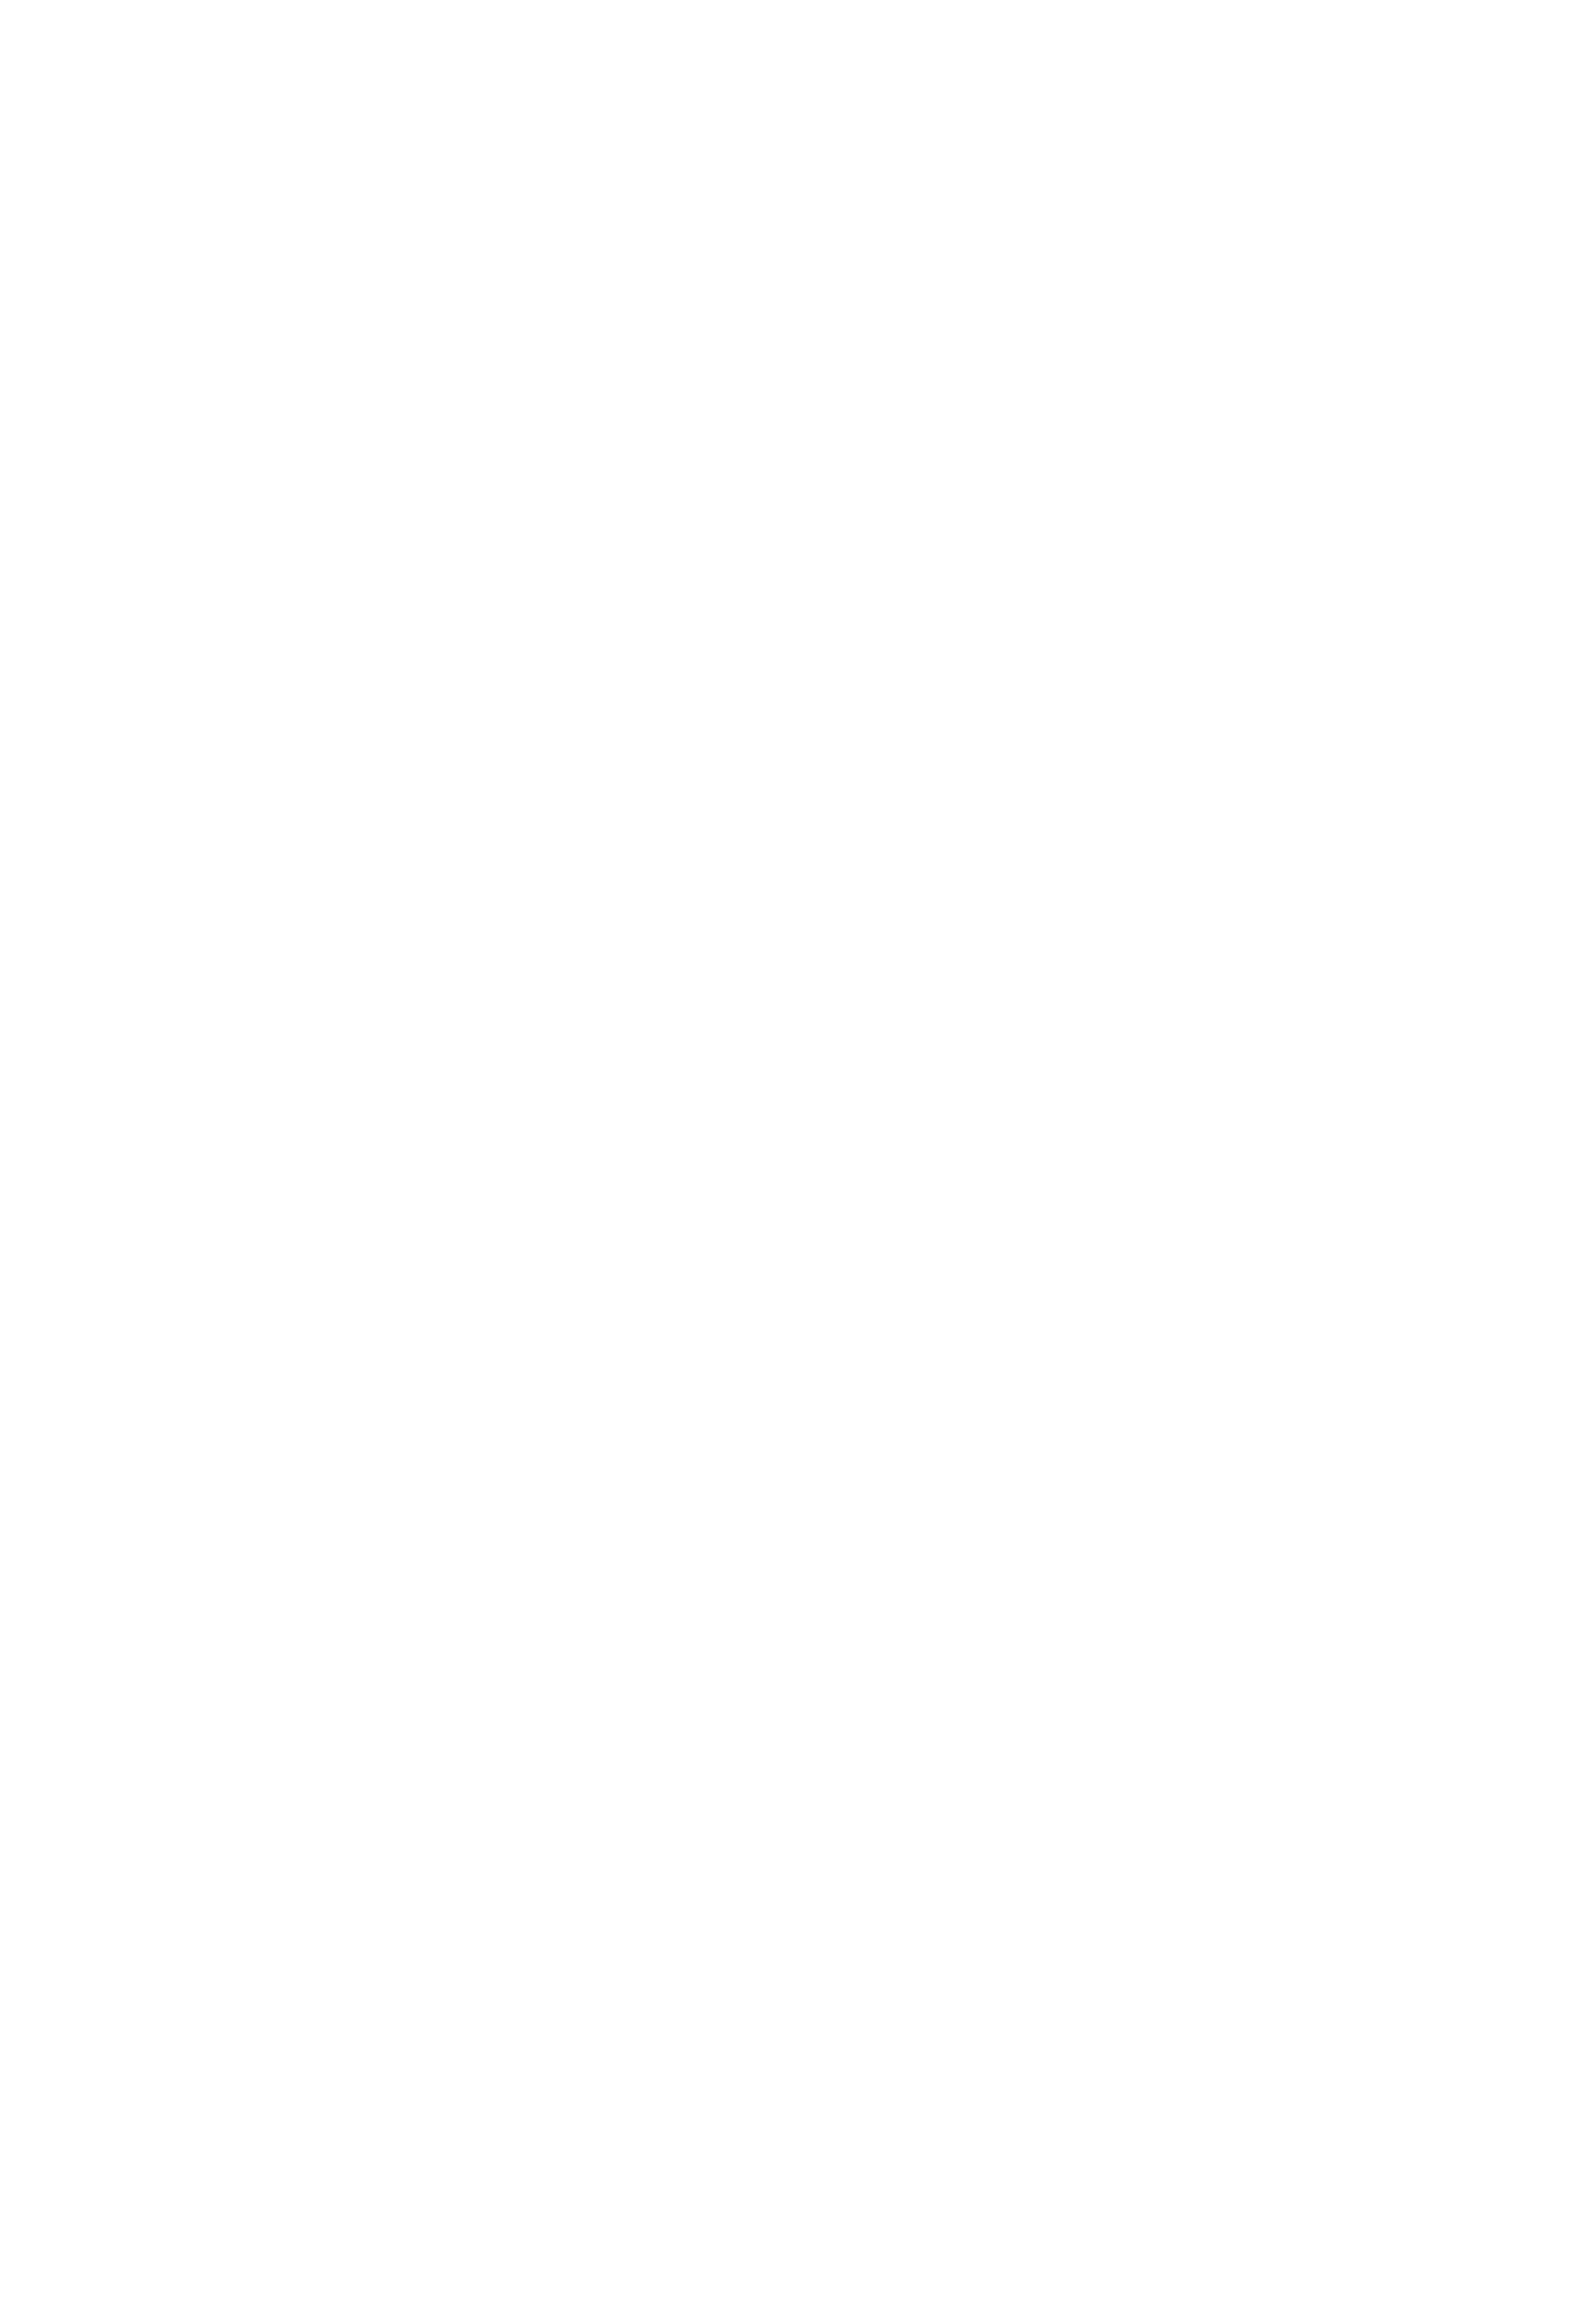 SSC